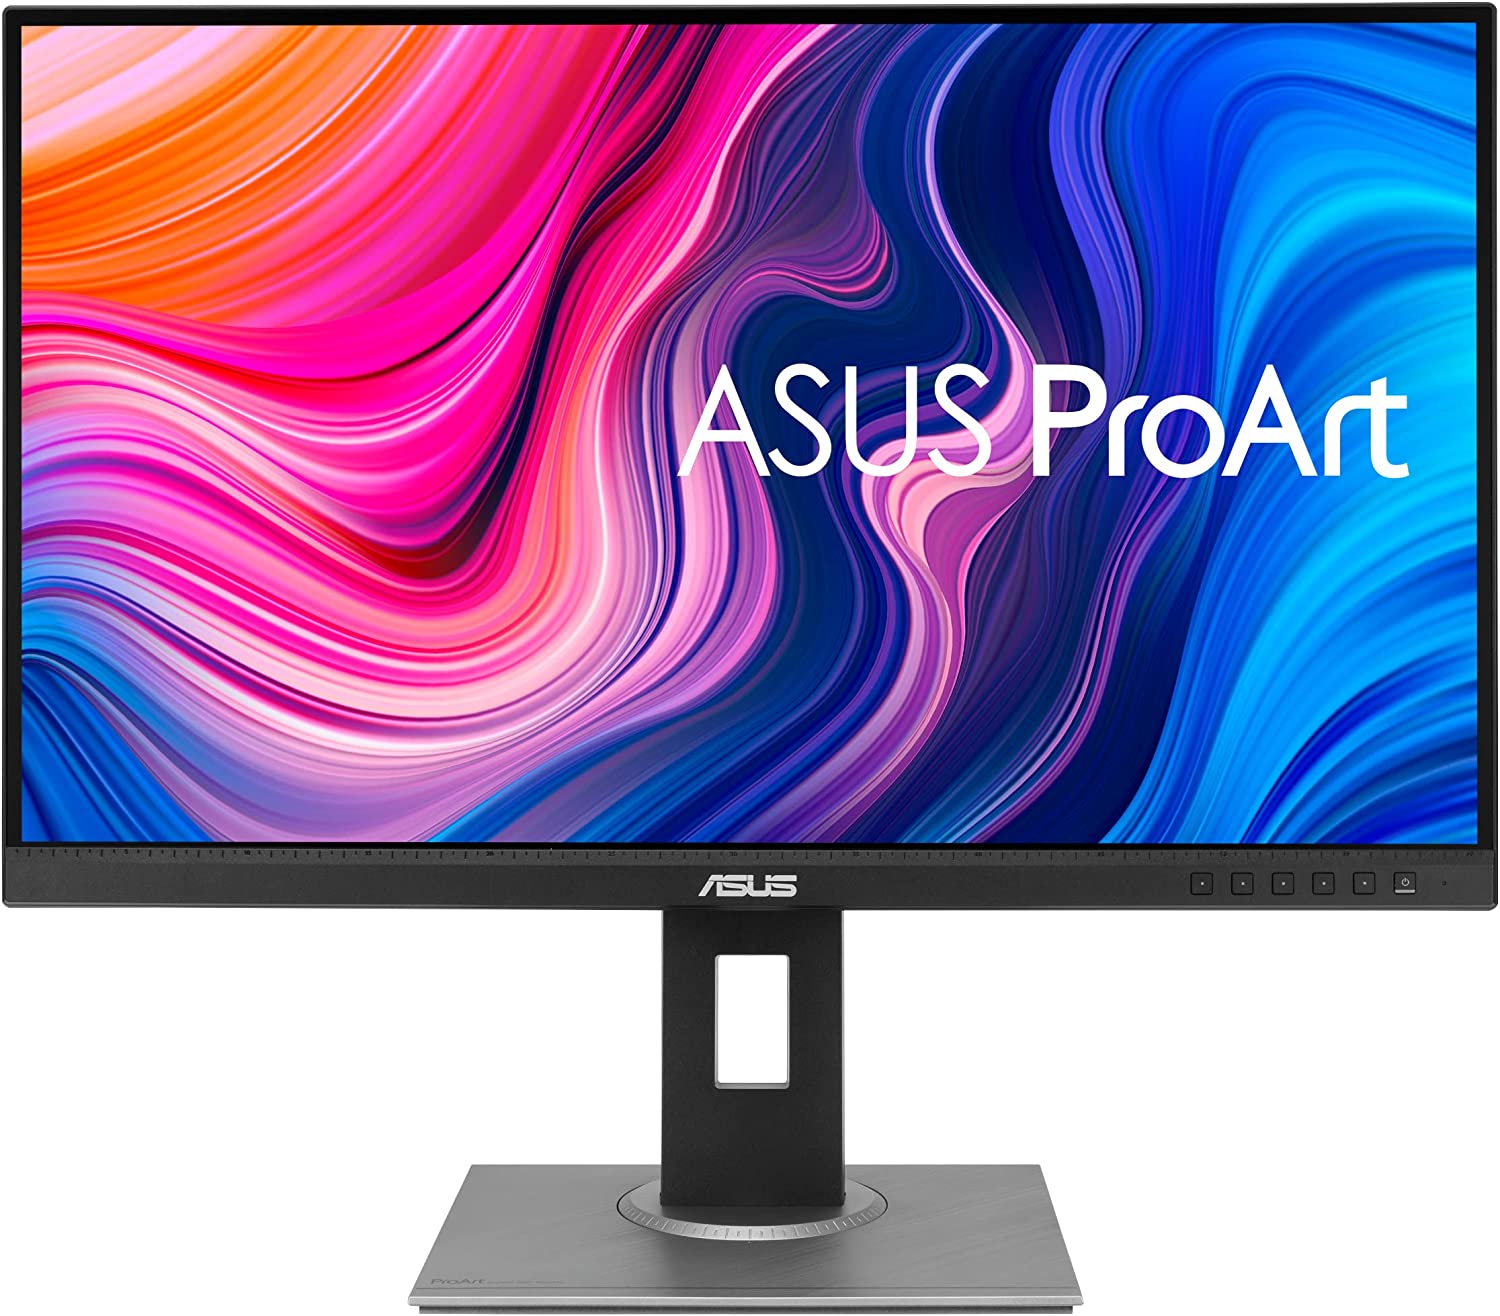 ASUS ProArt Display PA278QV 27” WQHD (2560 x 1440) Monitor, 100% sRGB:Rec. 709 ΔE < 2, IPS, DisplayPort HDMI DVI-D Mini DP, Calman Verified, Eye Care